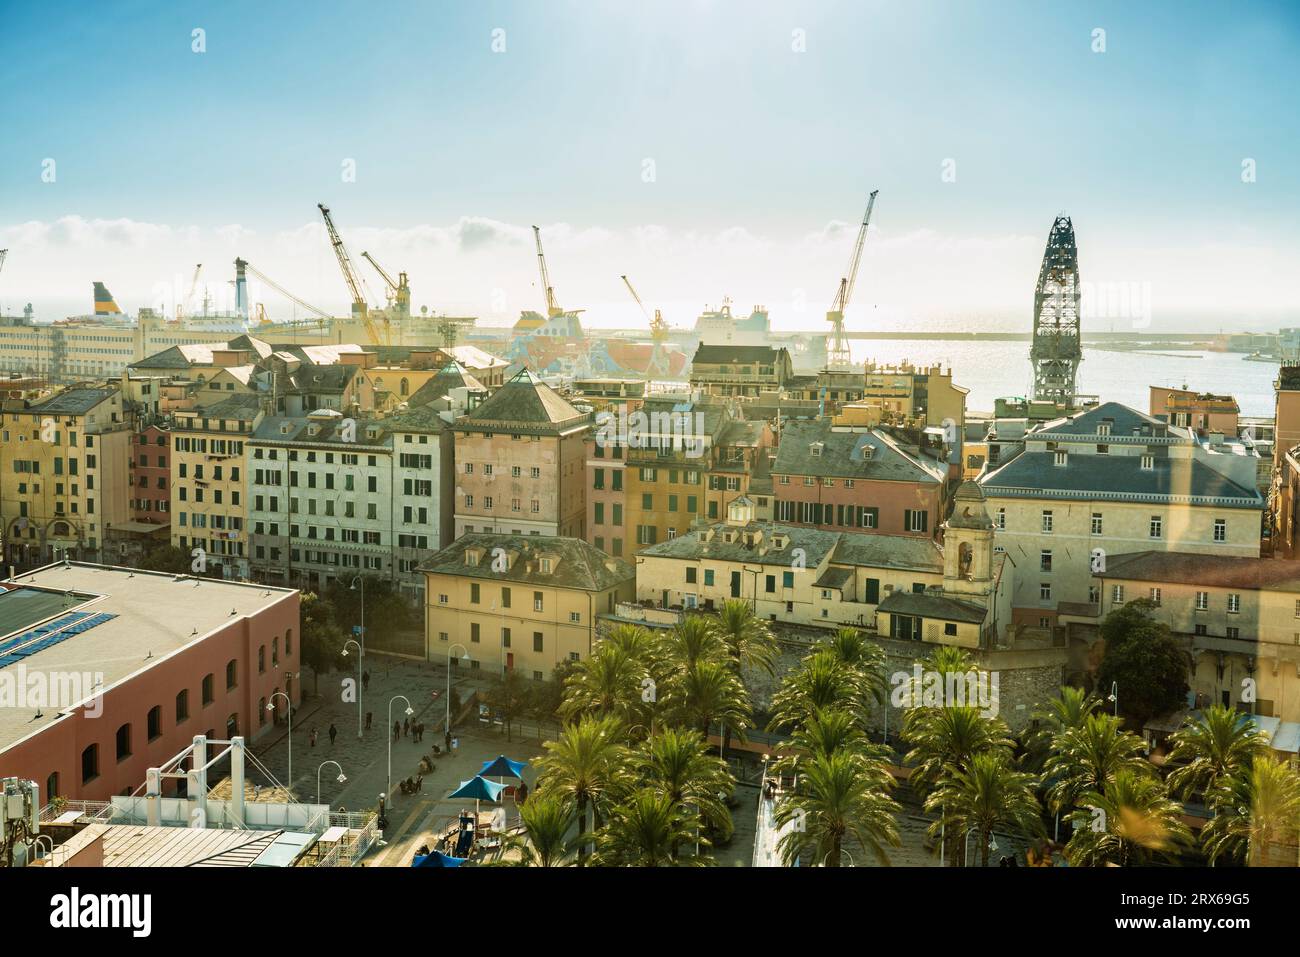 Italy, Liguria, Genoa, Apartment buildings with harbor cranes in background Stock Photo